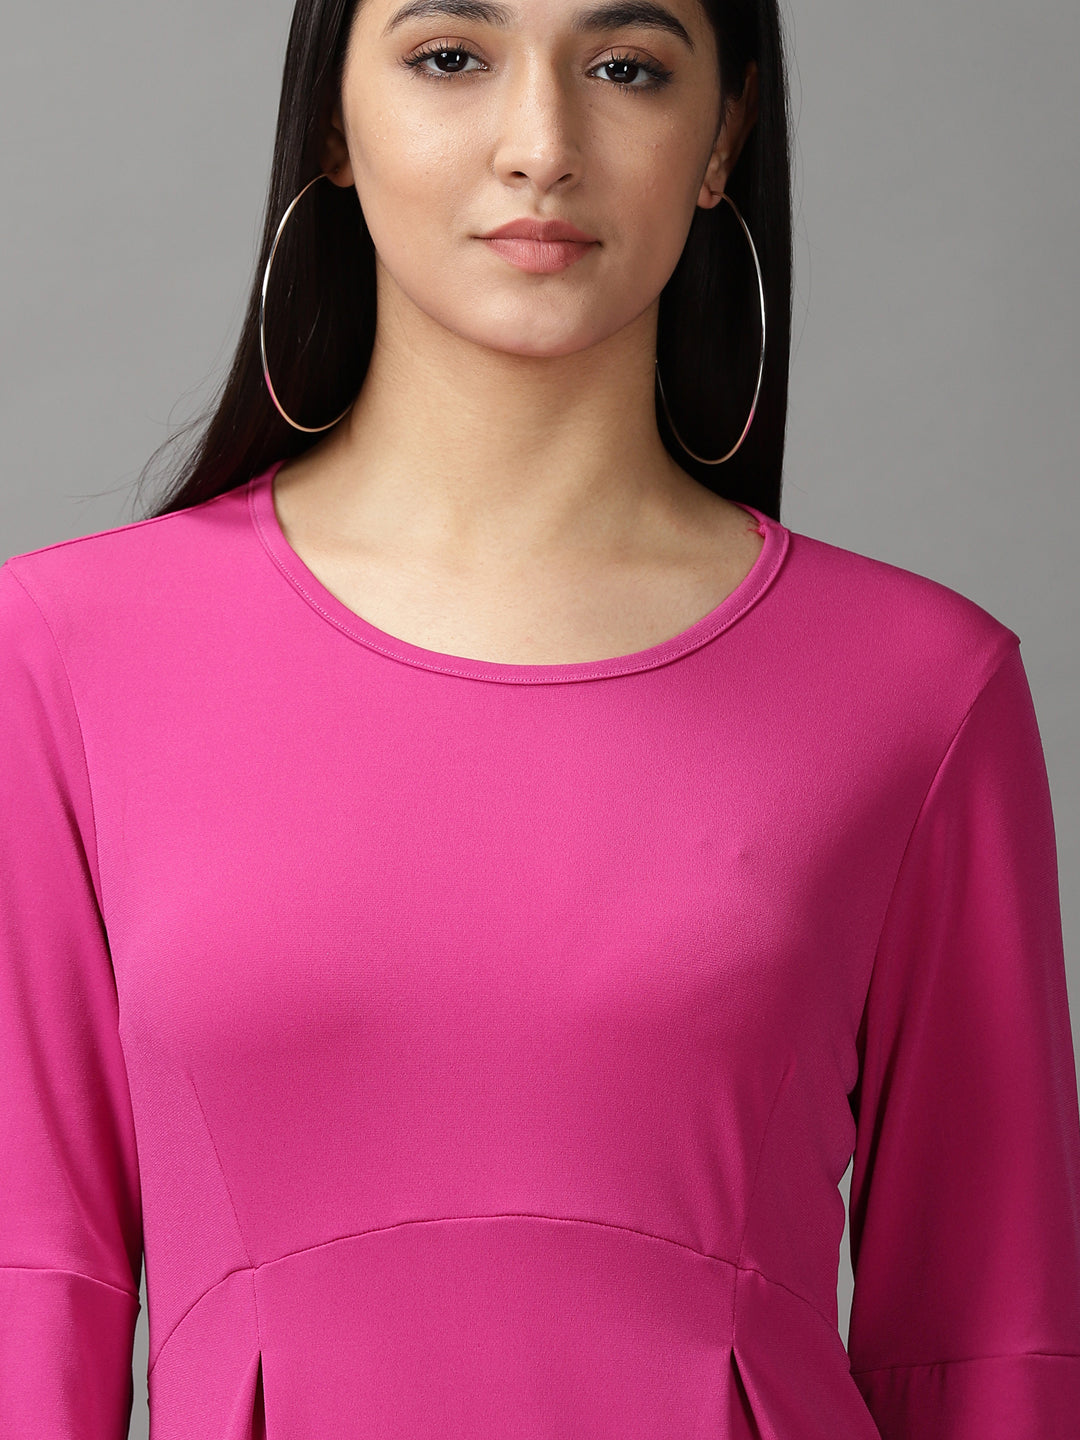 Women's Pink Solid Empire Dress